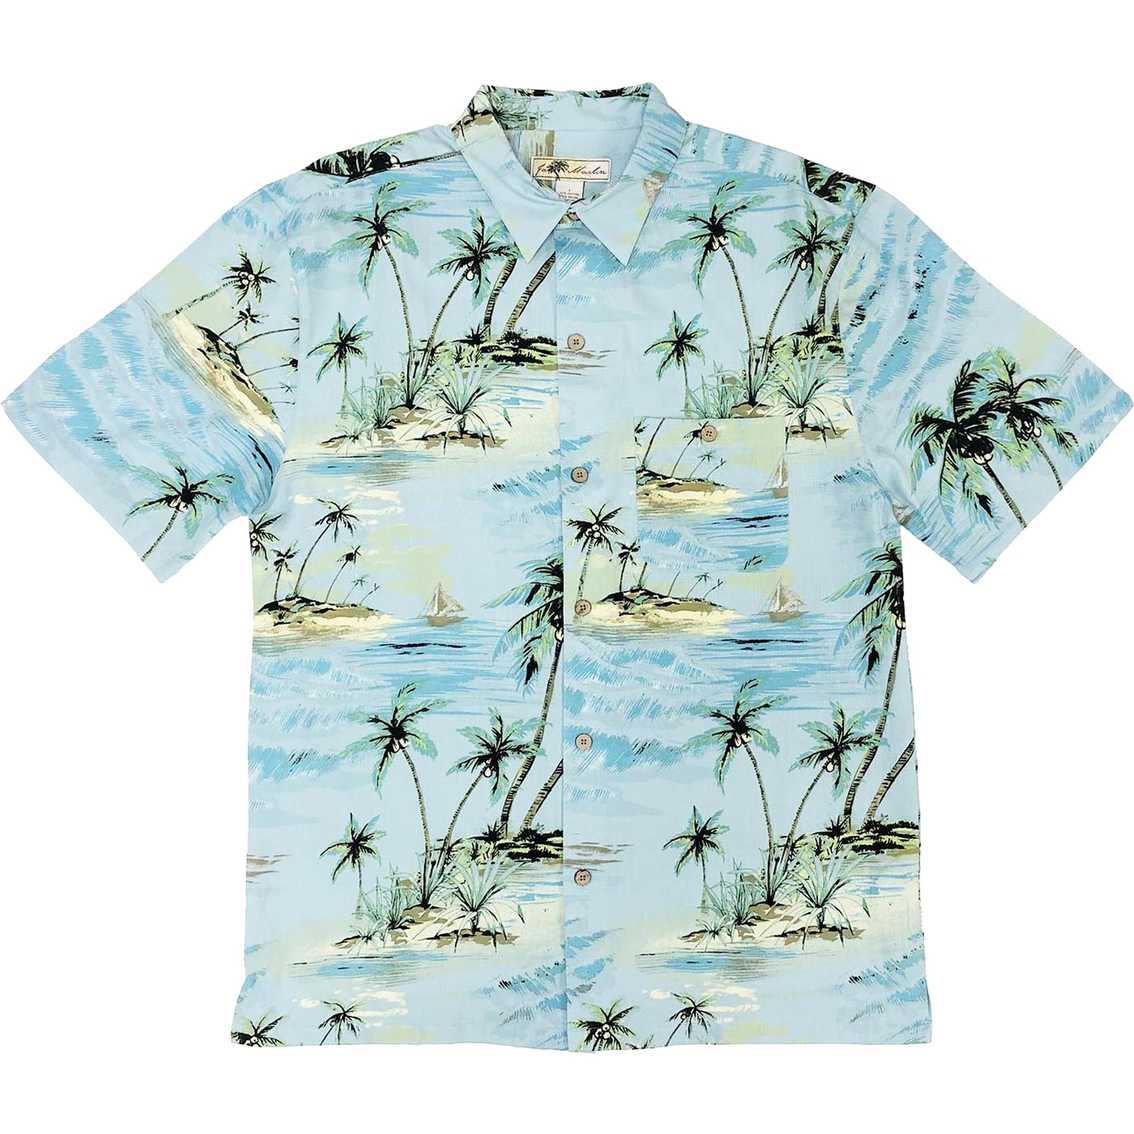 Joe Marlin Tropical Island Woven Shirt | Shirts | Clothing ...